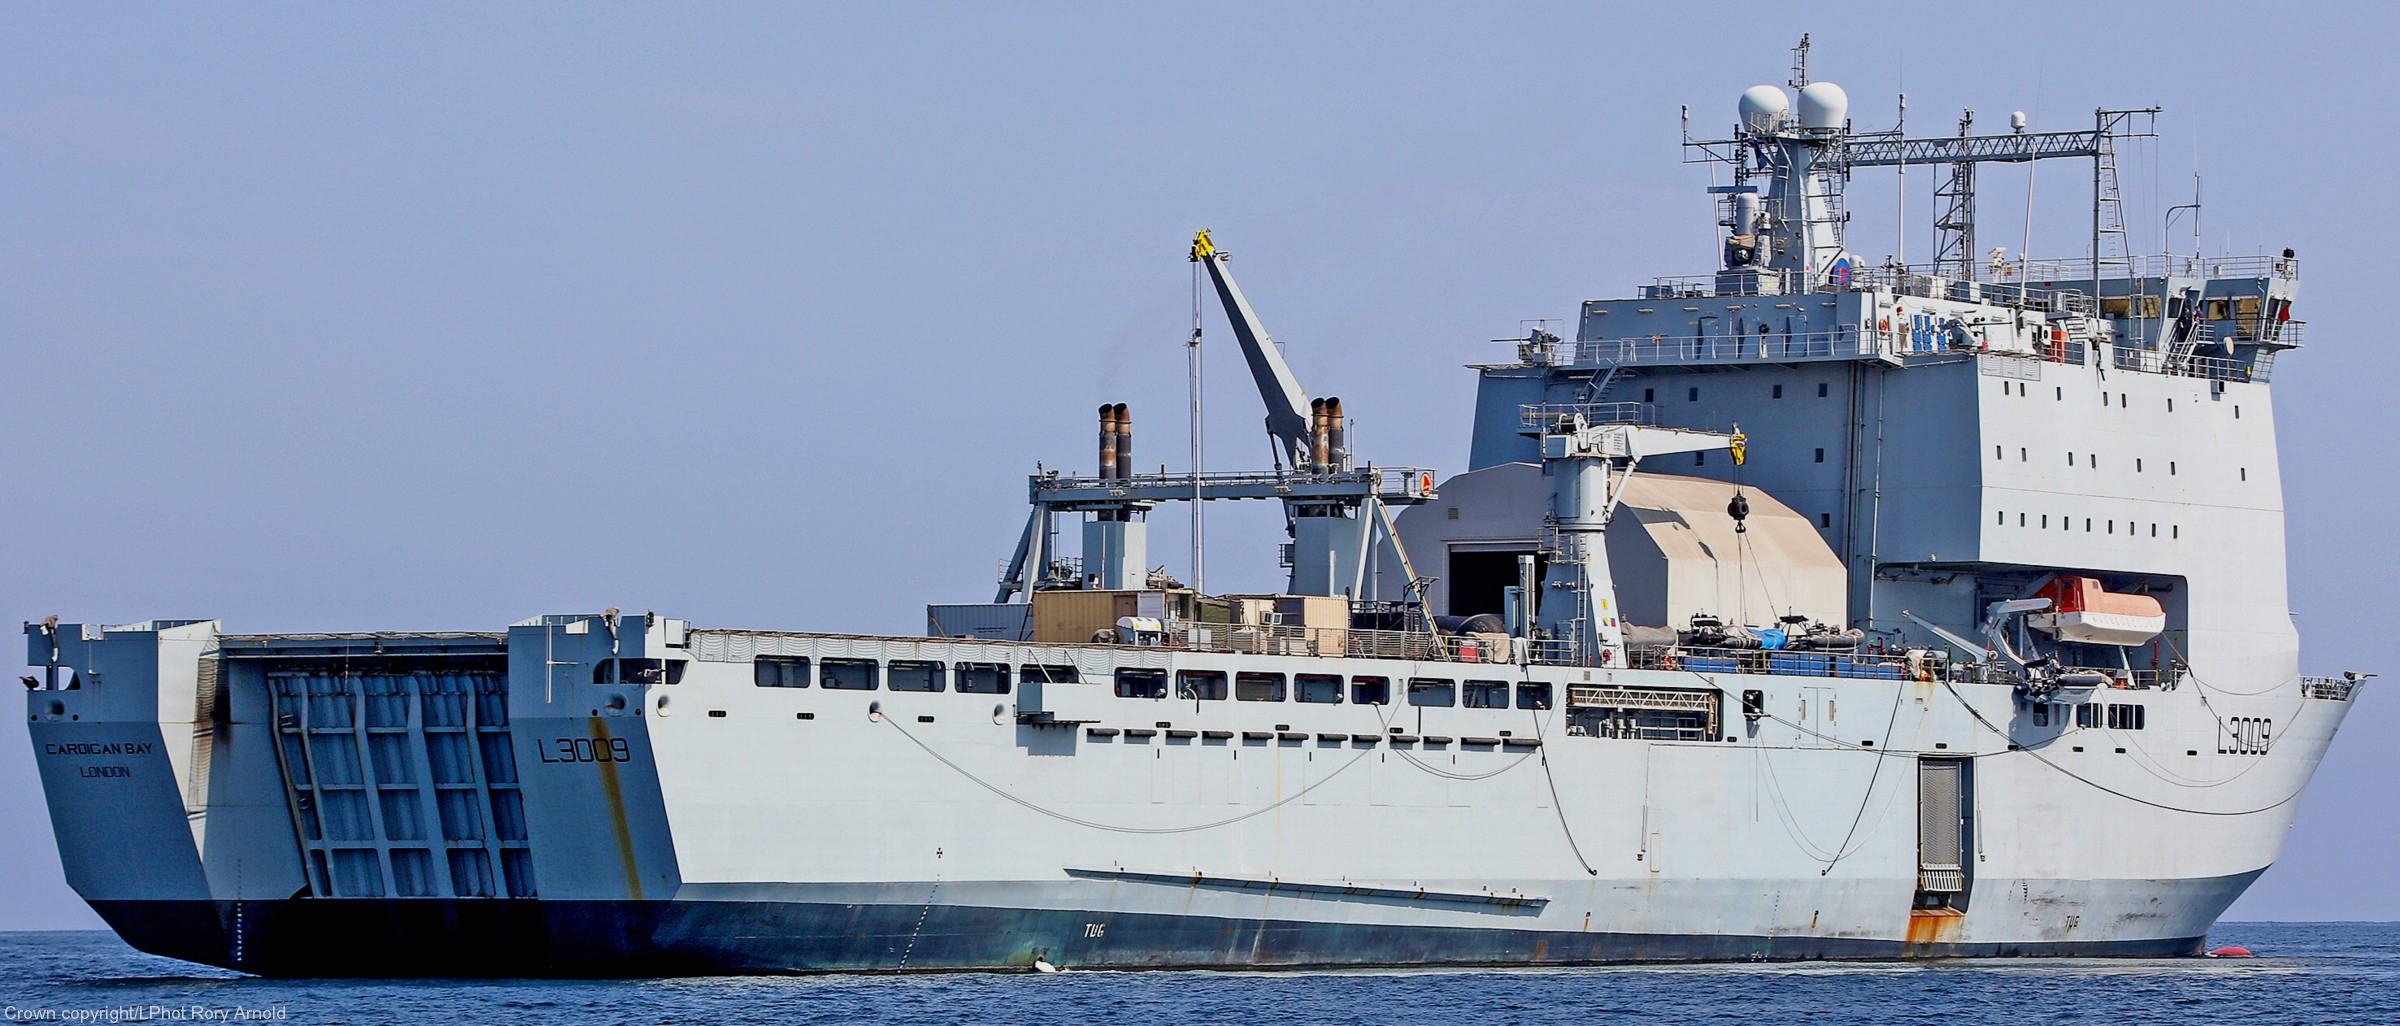 bay class amphibious dock landing ship royal fleet auxilary navy l-3009 cardigan 20c